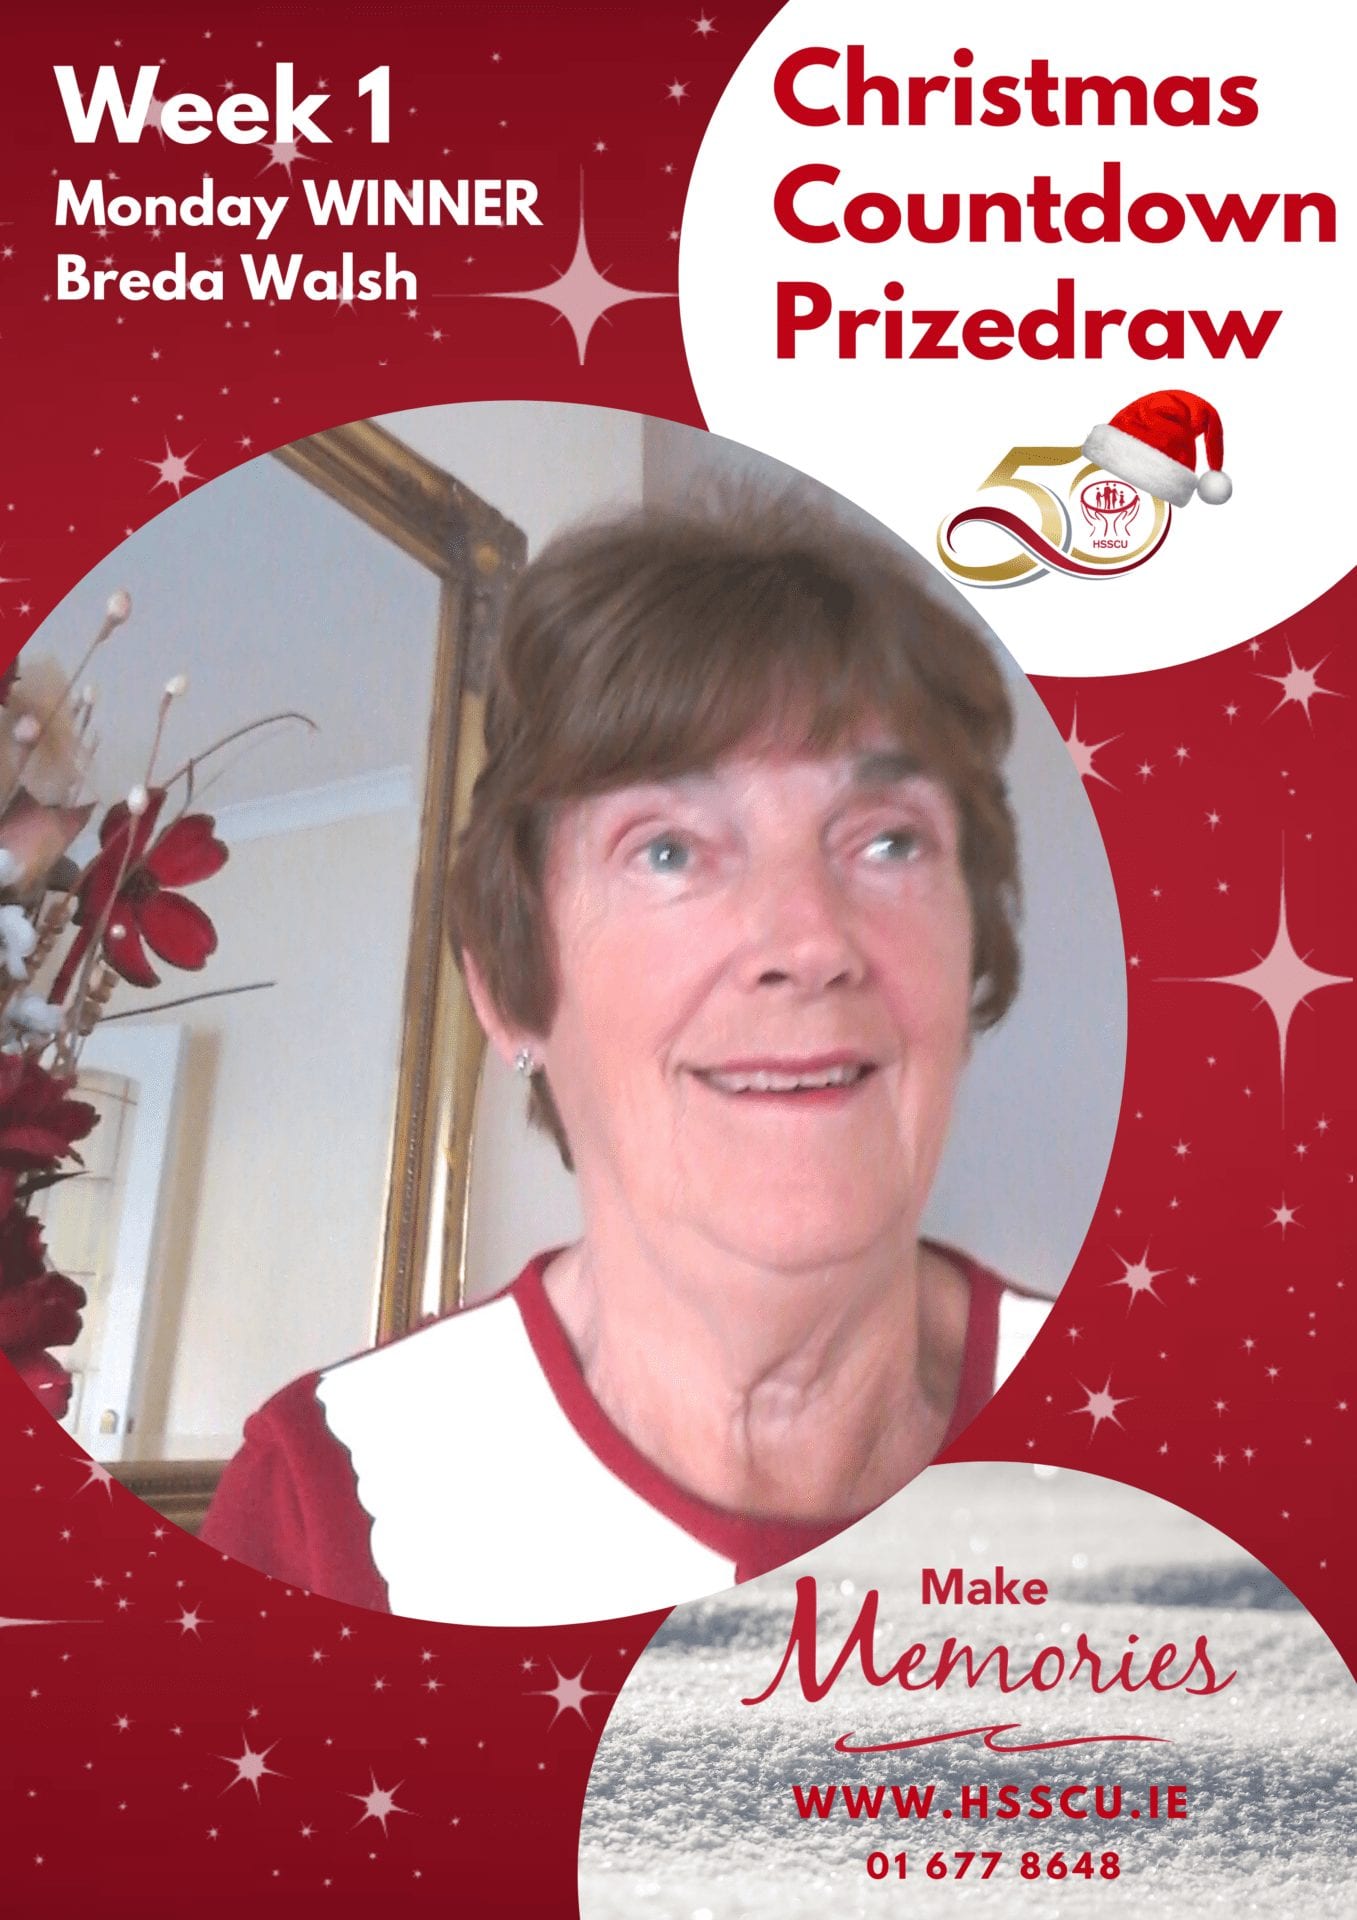 Breda Walsh - HSSCU Christmas Countdown Prize Draw Winner